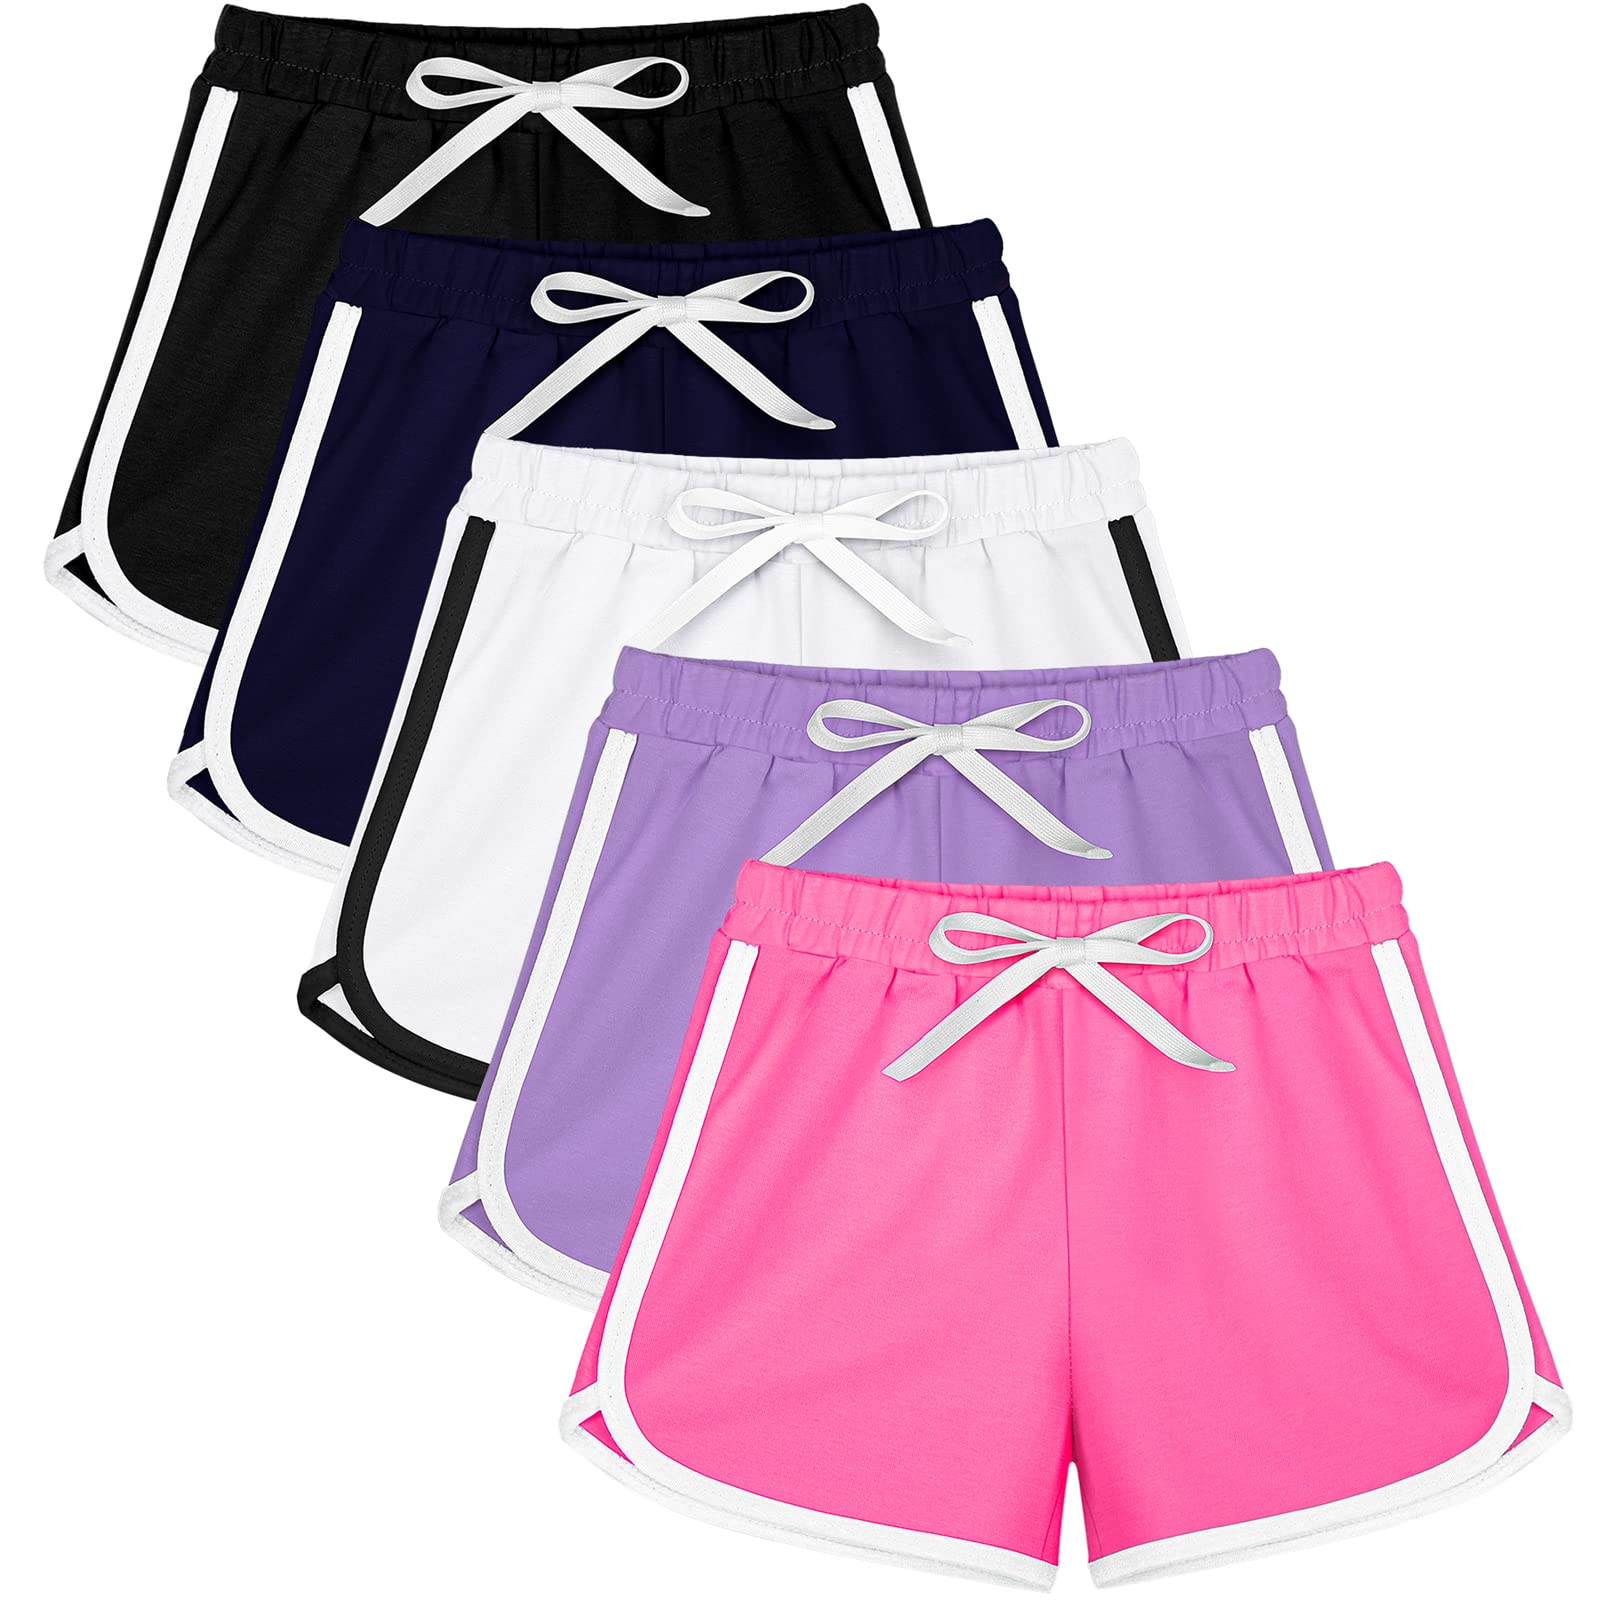 Resinta 4 Pack Girls Mesh Athletic Shorts Kids Summer Active